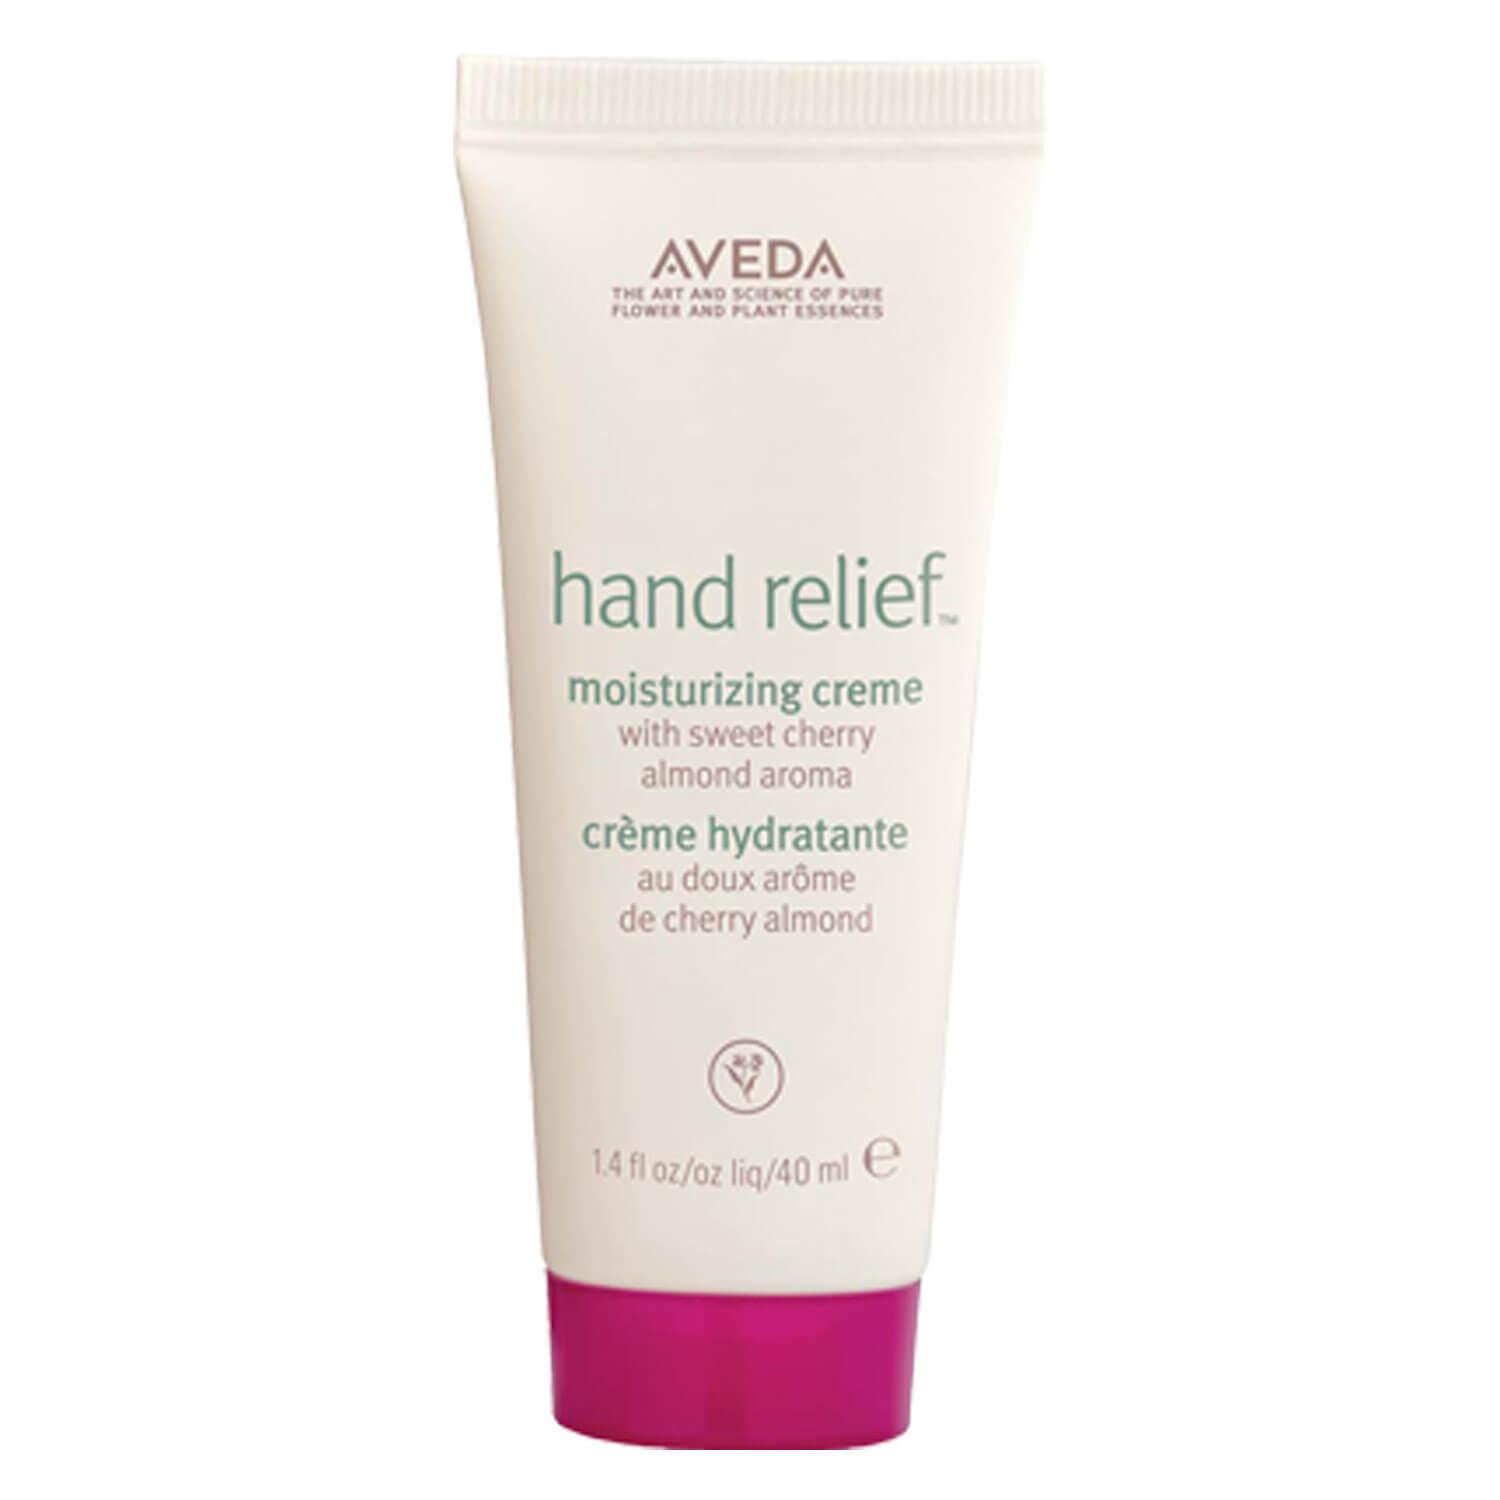 hand relief - moisturizing creme cherry almond